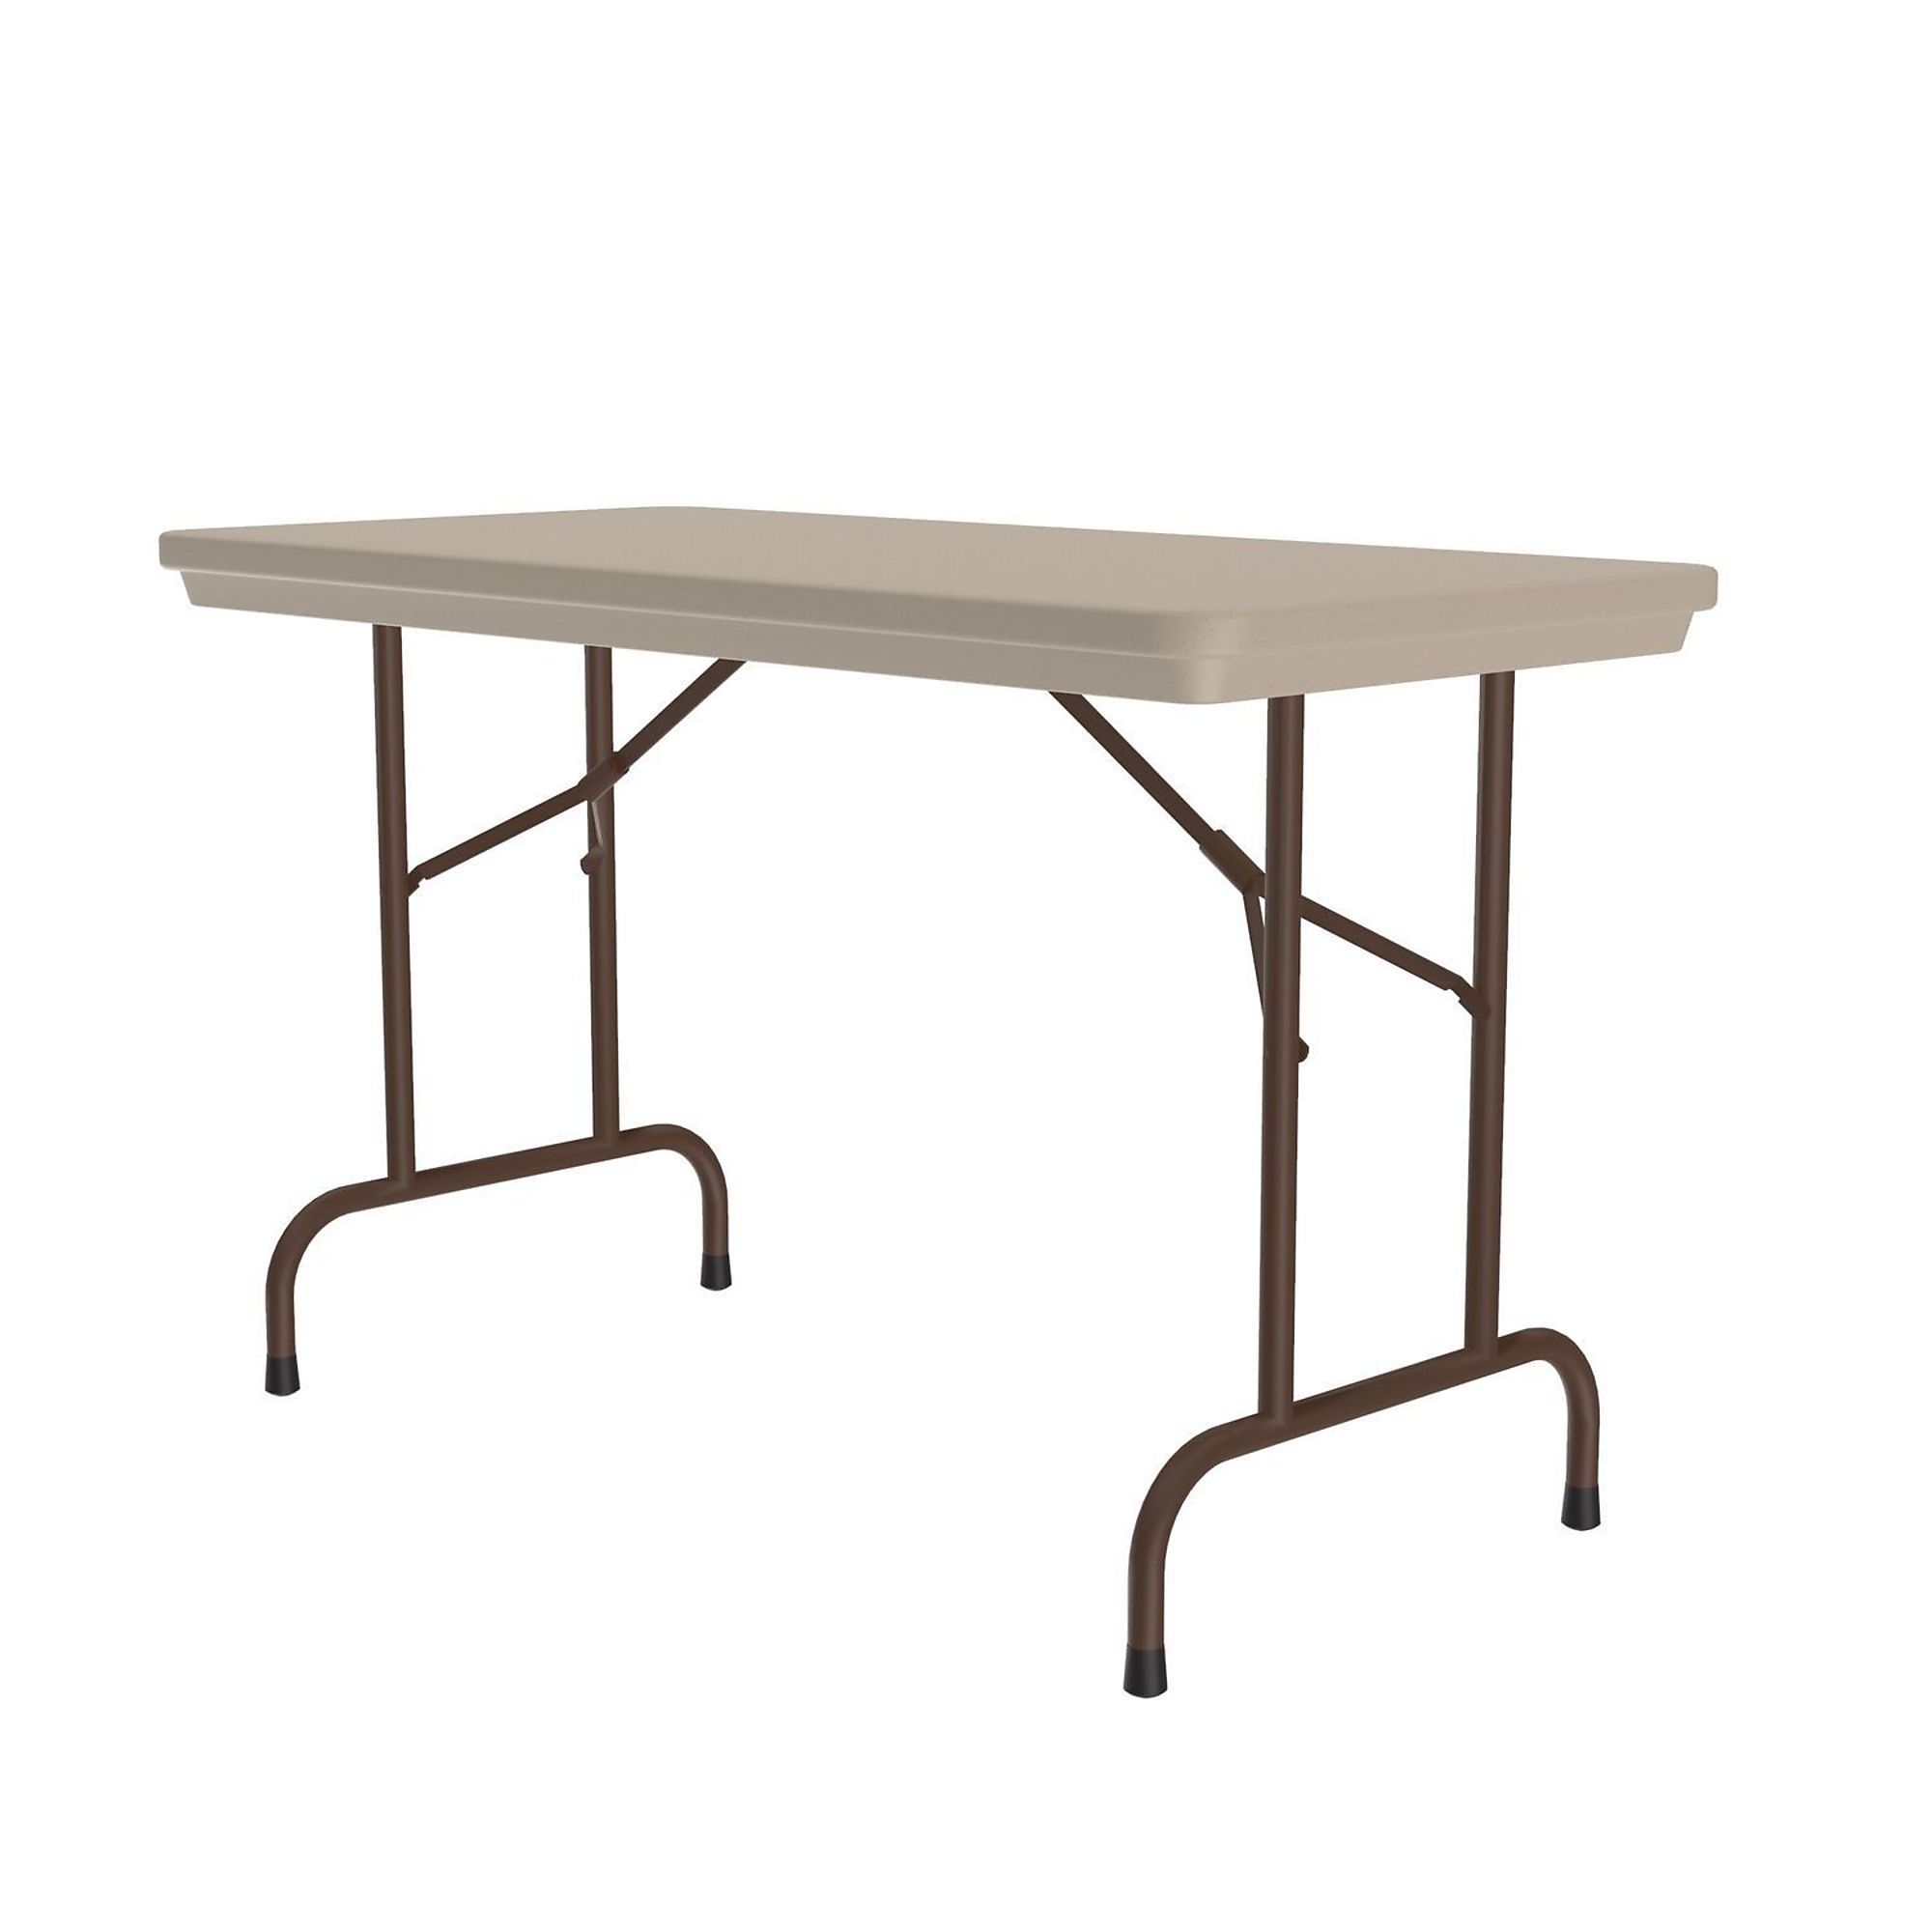 Correll, Plastic Folding Table, Mocha Granite Top, 24x48, Height 29 in, Width 24 in, Length 48 in, Model R2448-24